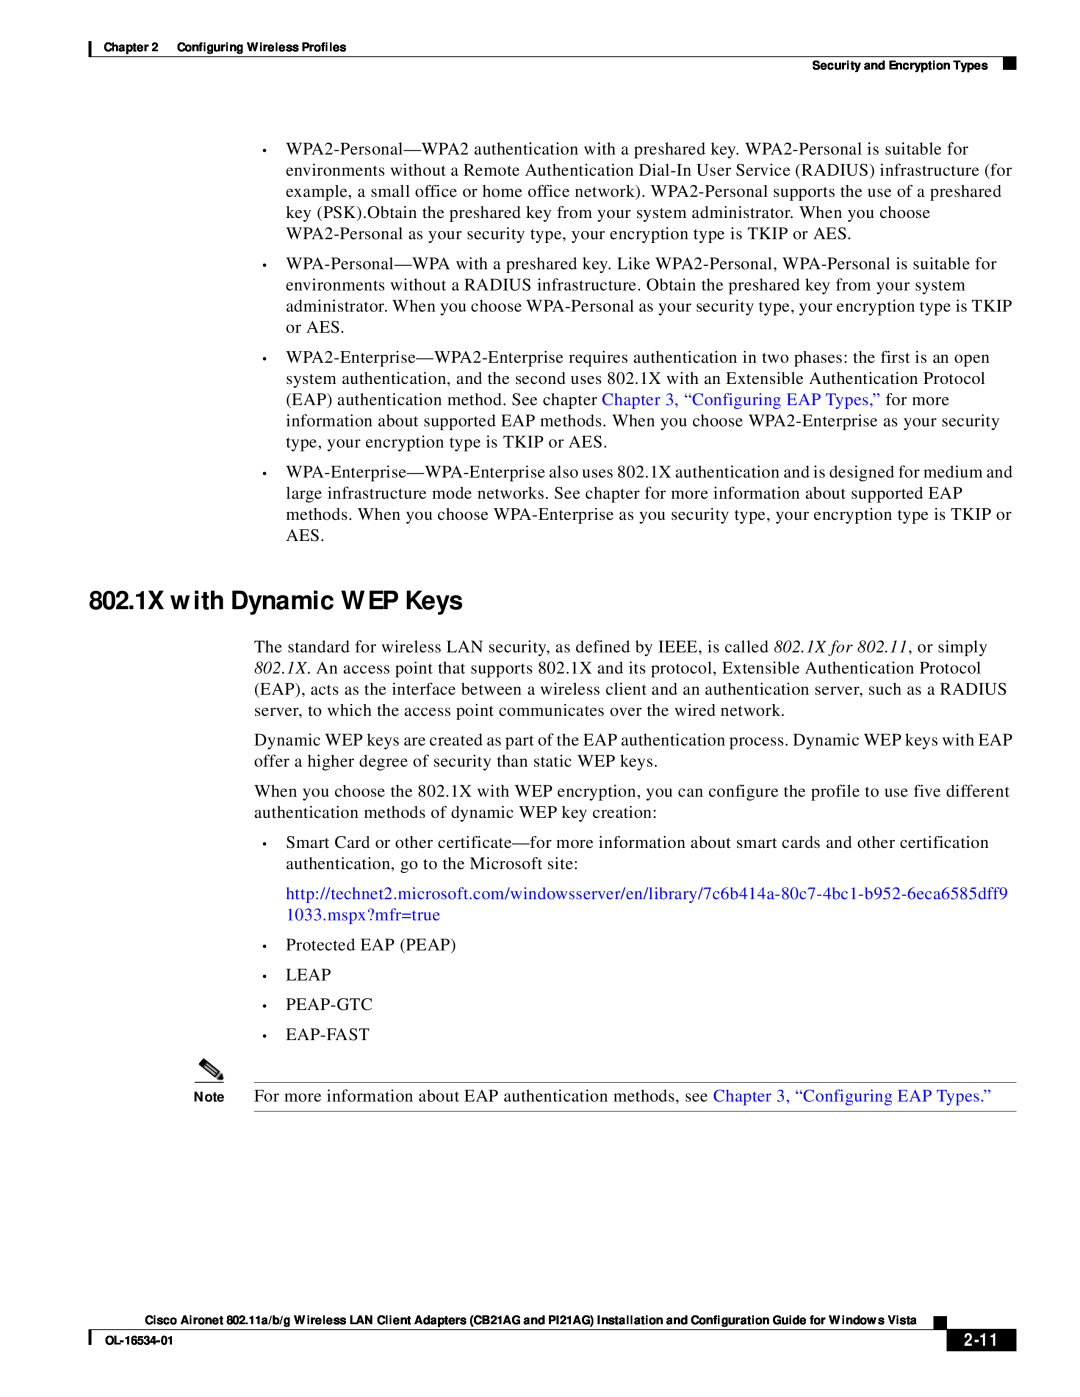 Cisco Systems CB21AG, PI21AG manual 802.1X with Dynamic WEP Keys, 2-11 